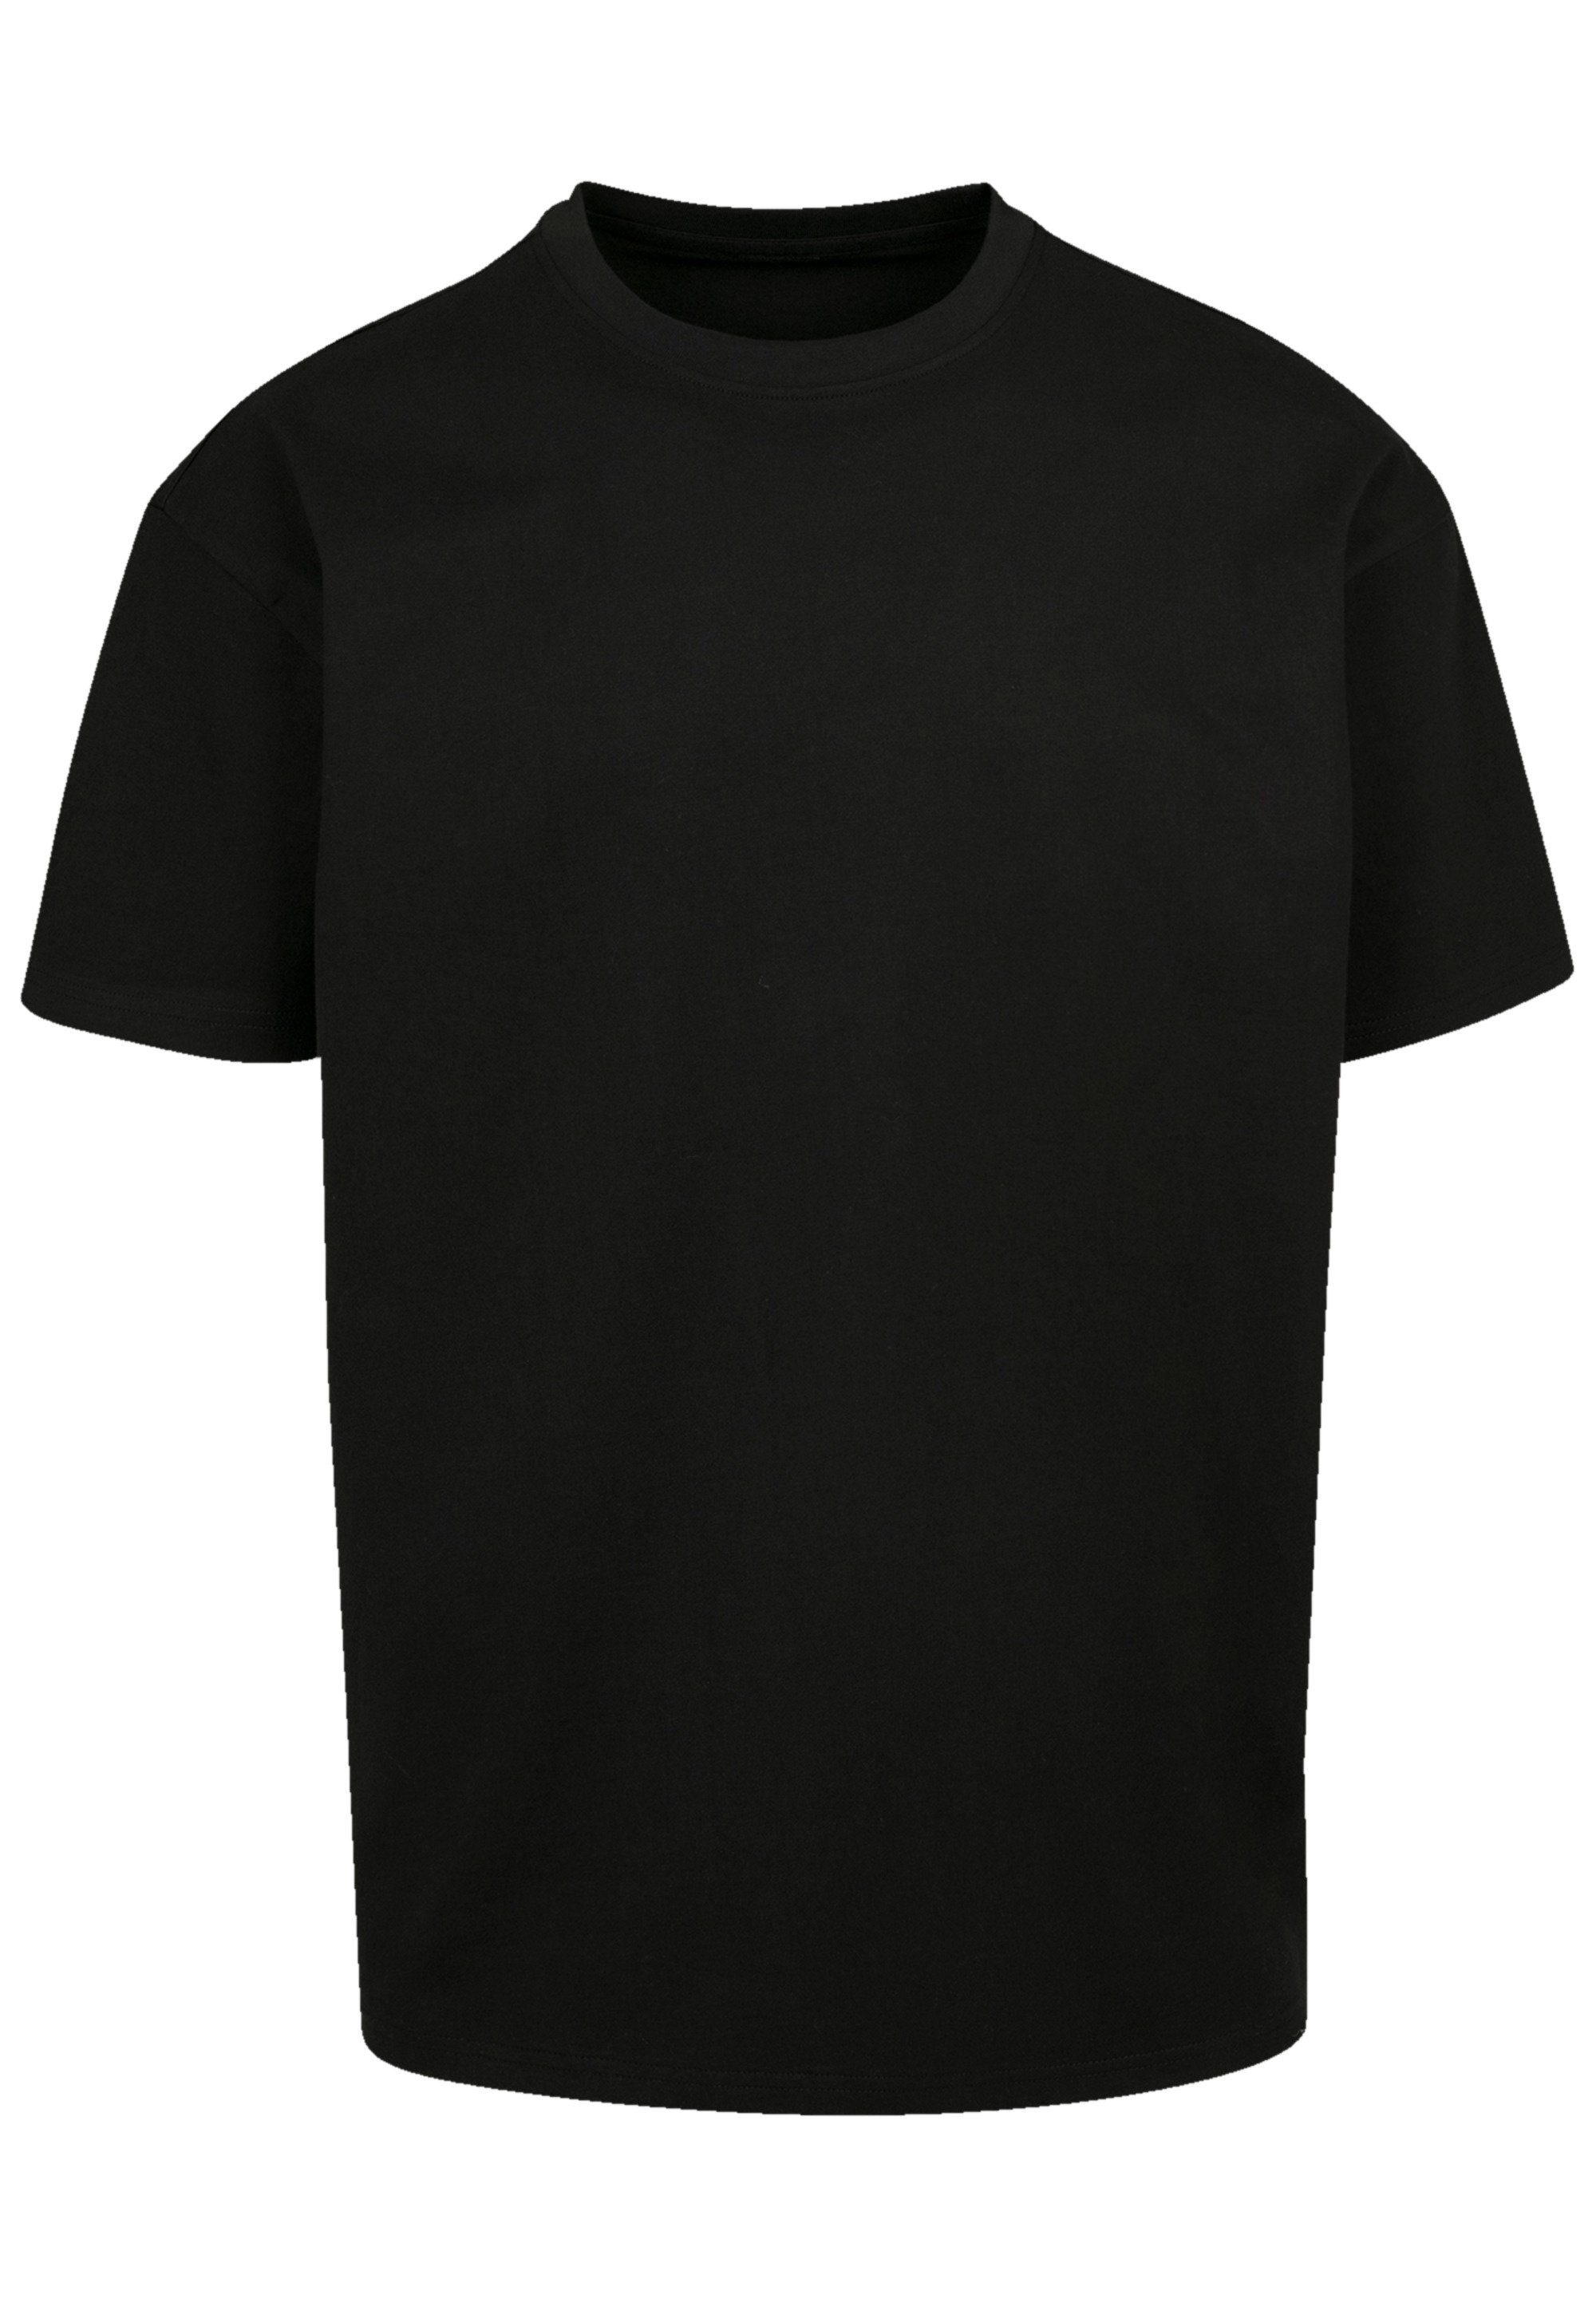 F4NT4STIC T-Shirt up schwarz Print Sunny side